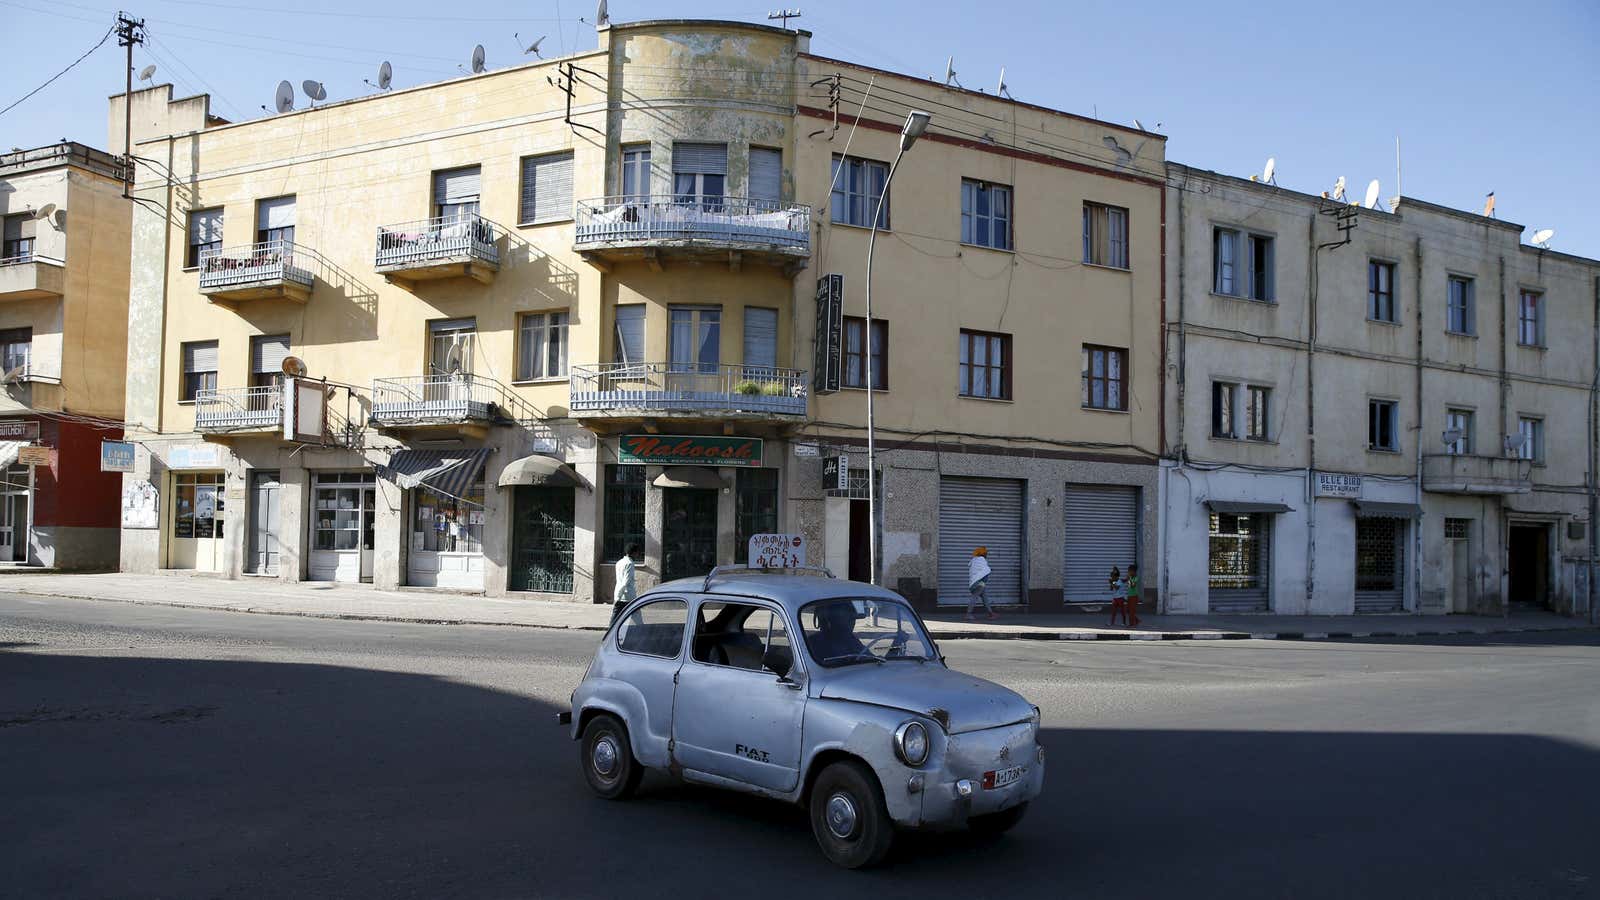 A Fiat drives along a street in Eritrea’s capital Asmara.